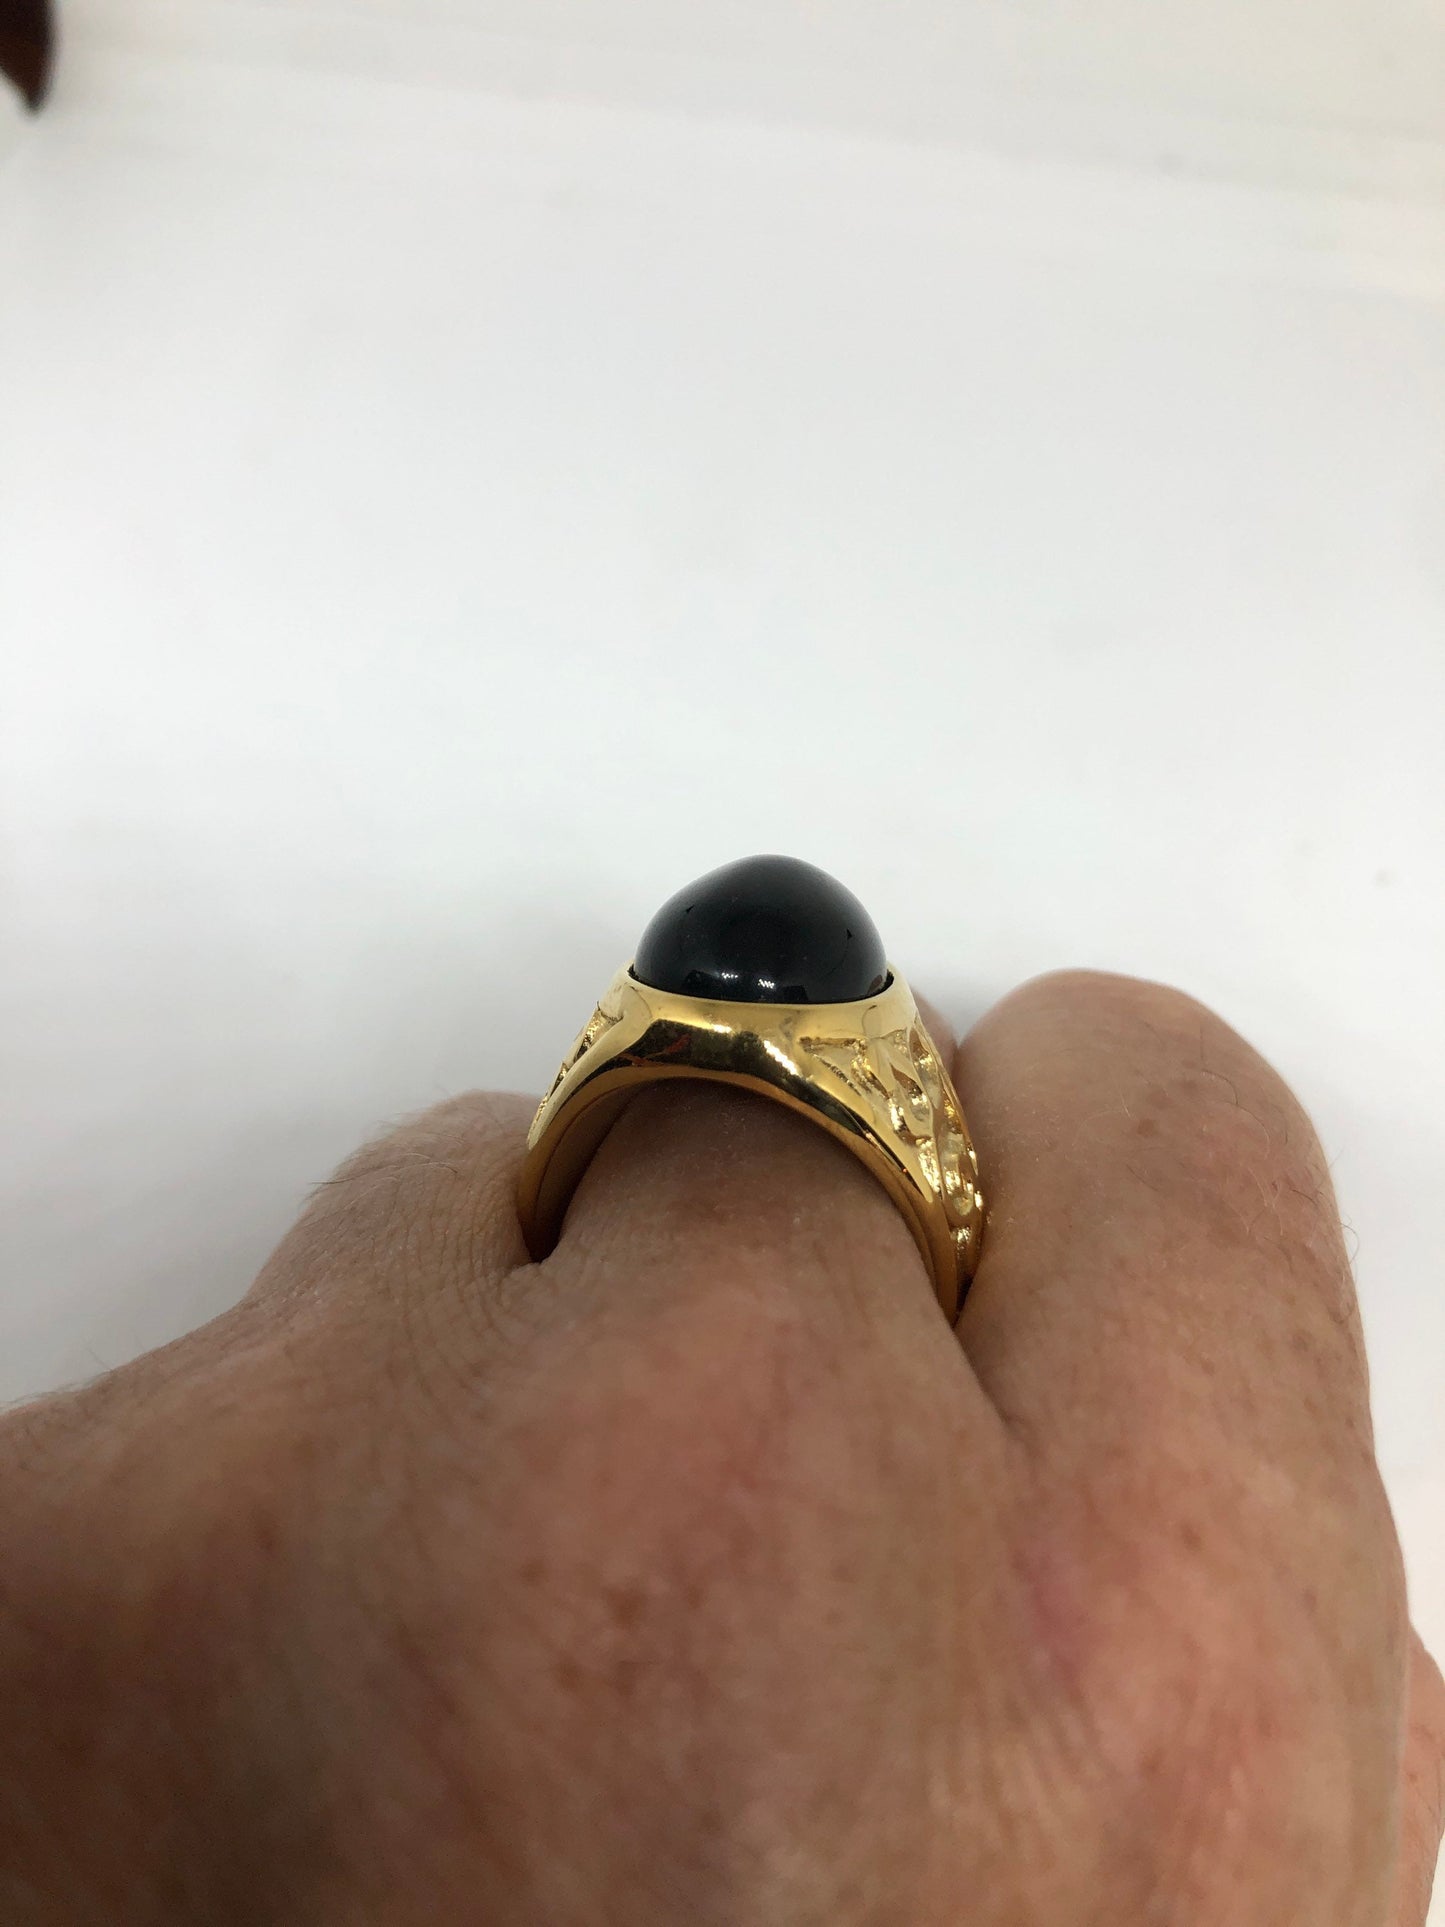 Vintage Gothic Black Onyx Egyptian Golden Stainless Steel Mens Ring